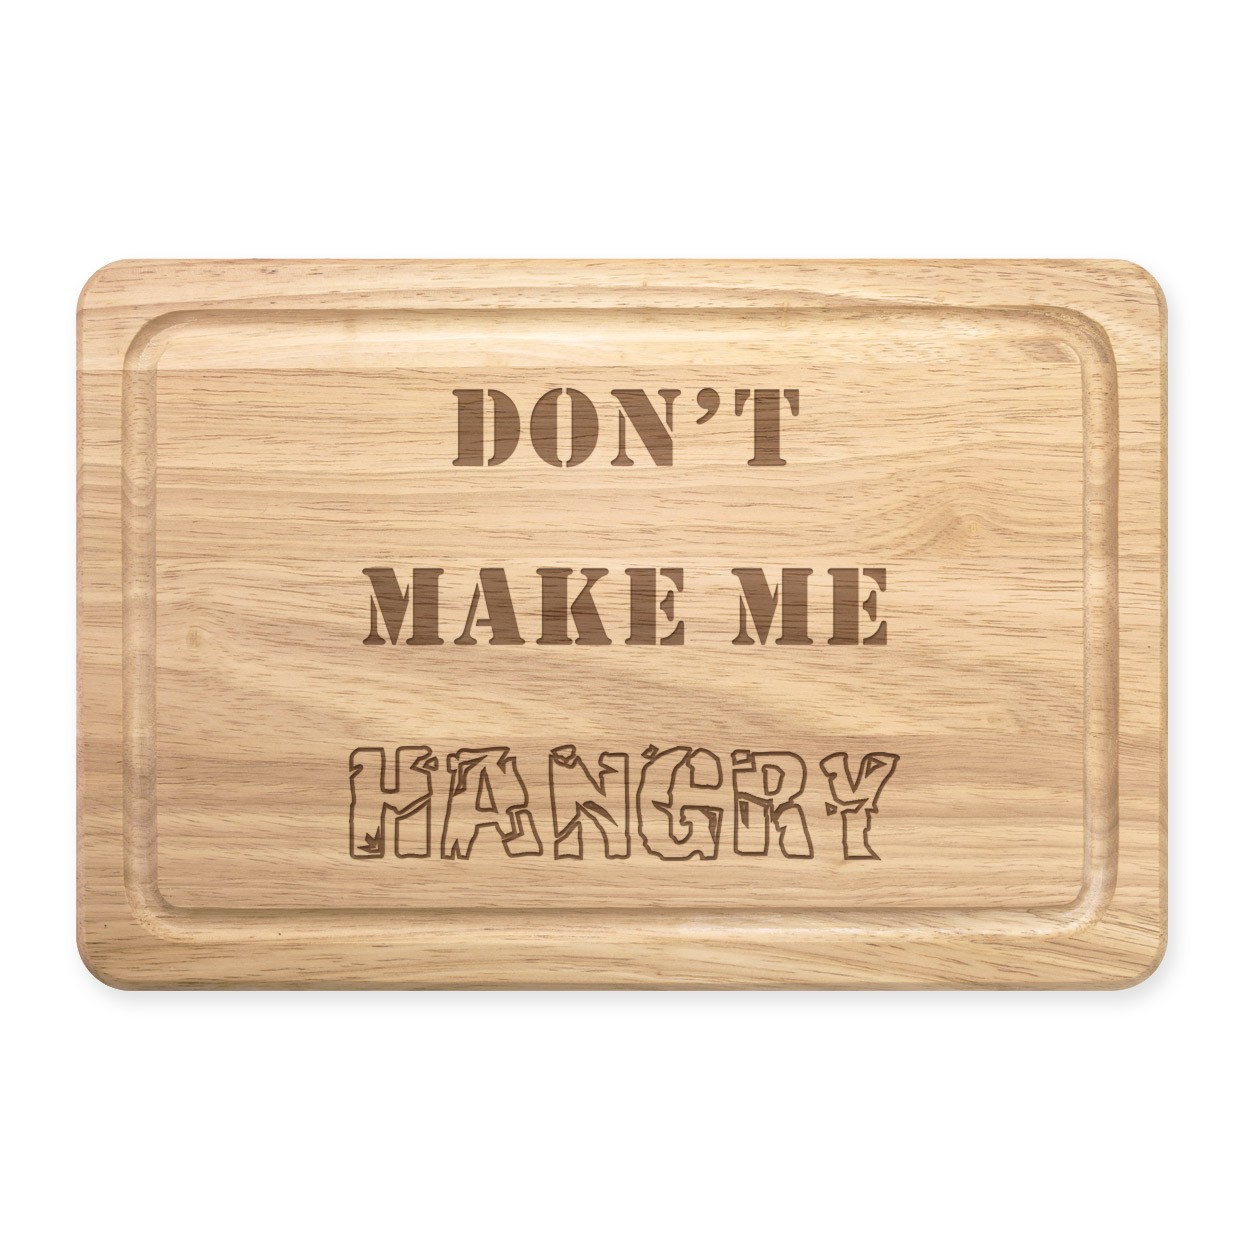 Don't Make Me Hangry Rectangular Wooden Chopping Board